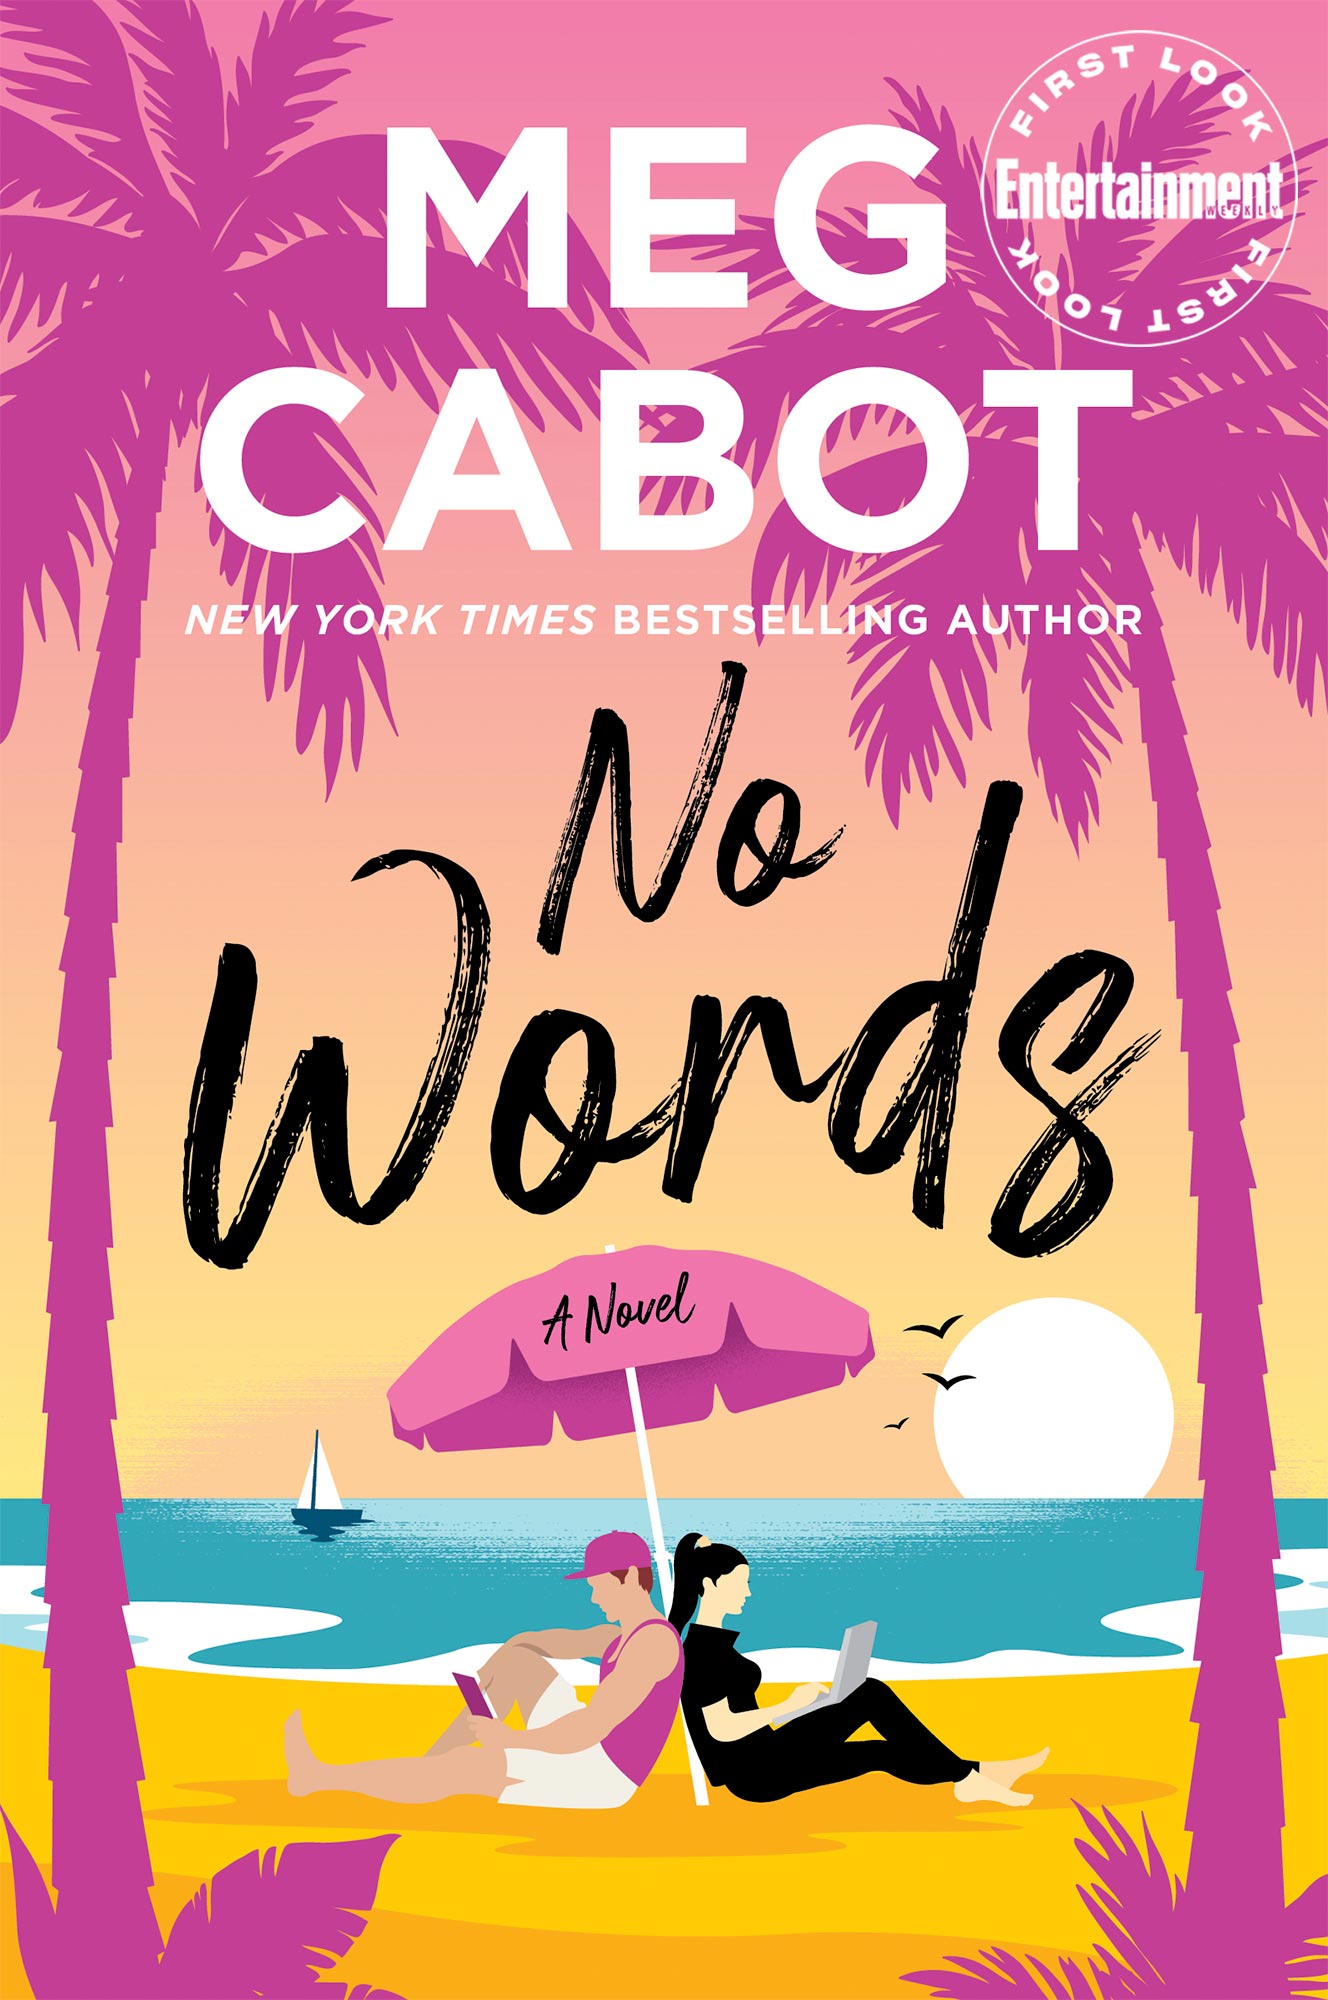 Meg Cabot was sad COVID canceled book festivals, so she wrote a novel set at one